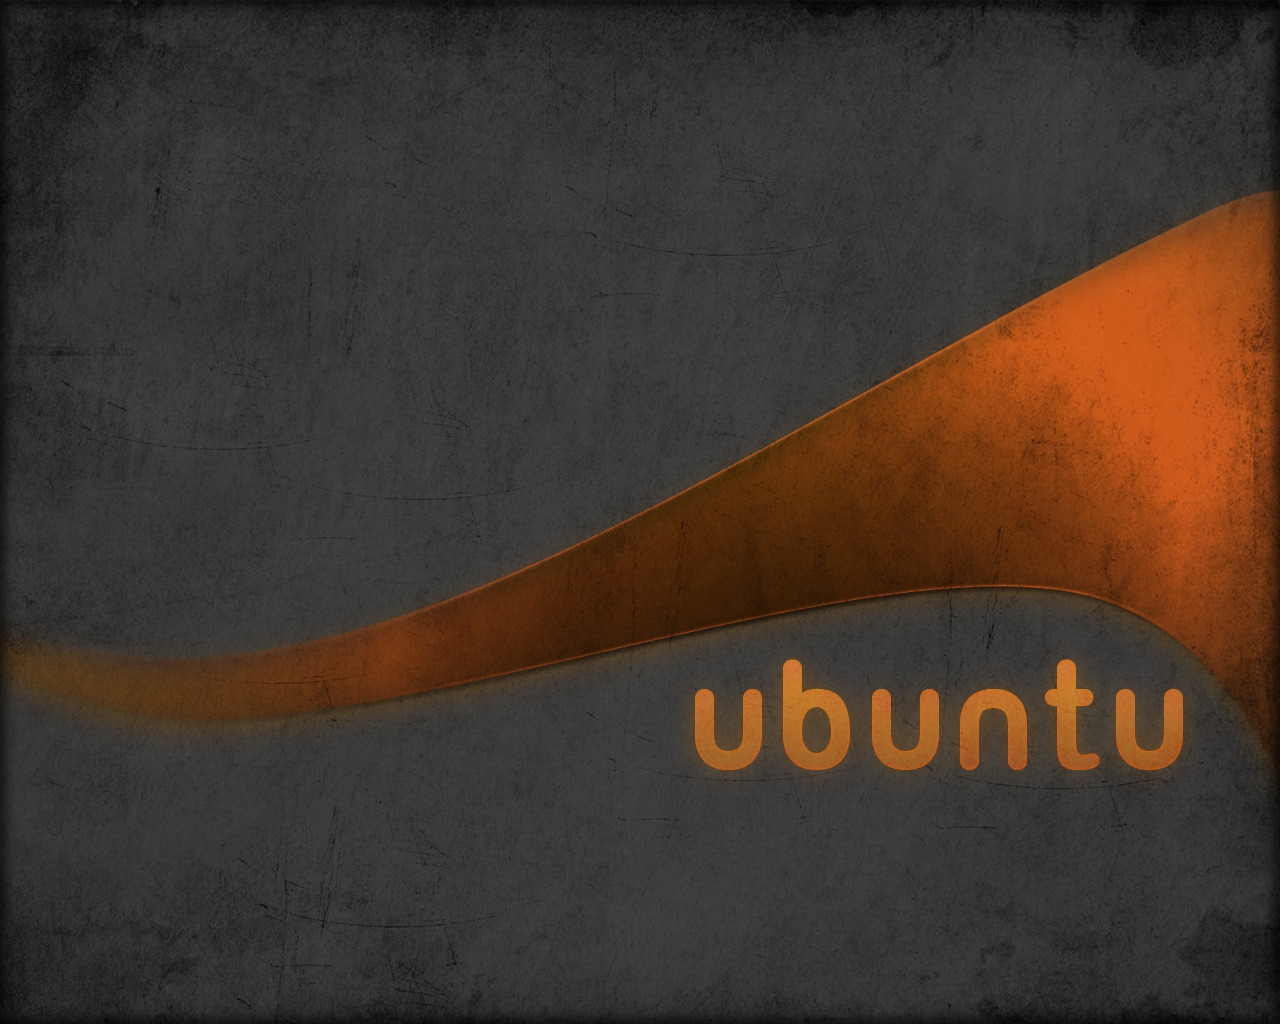 Ubuntu for 1280 x 1024 resolution